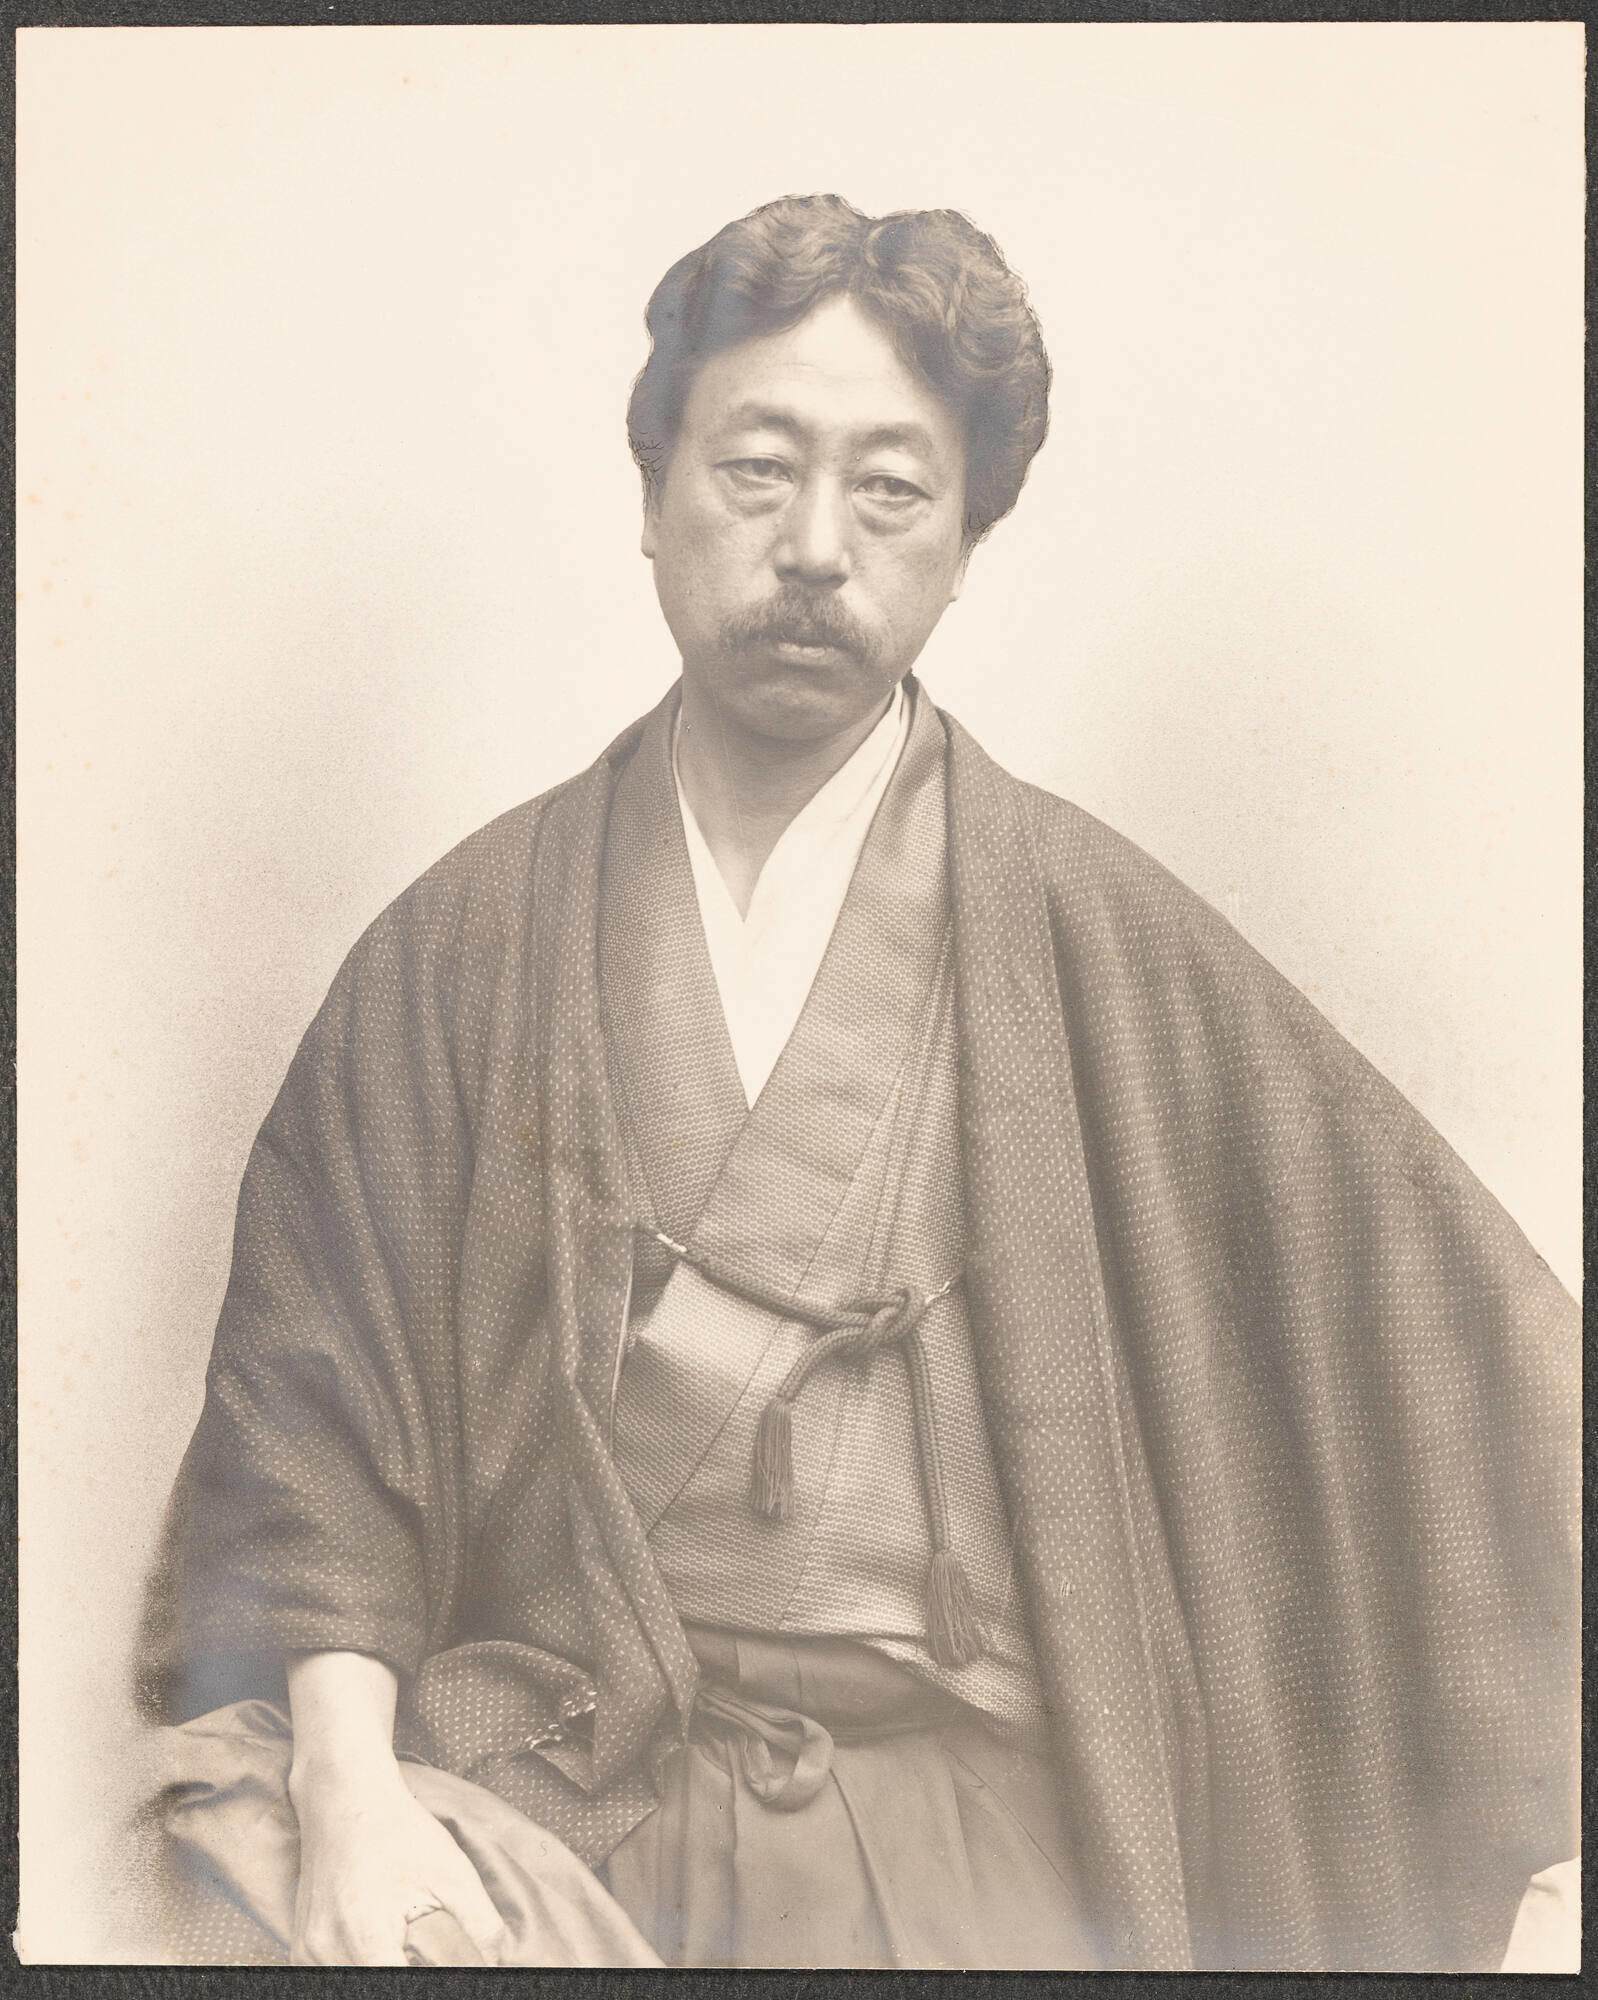 A black and white portrait photograph of a Japanese man, Okakura Kakuzō, wearing Japanese robes.